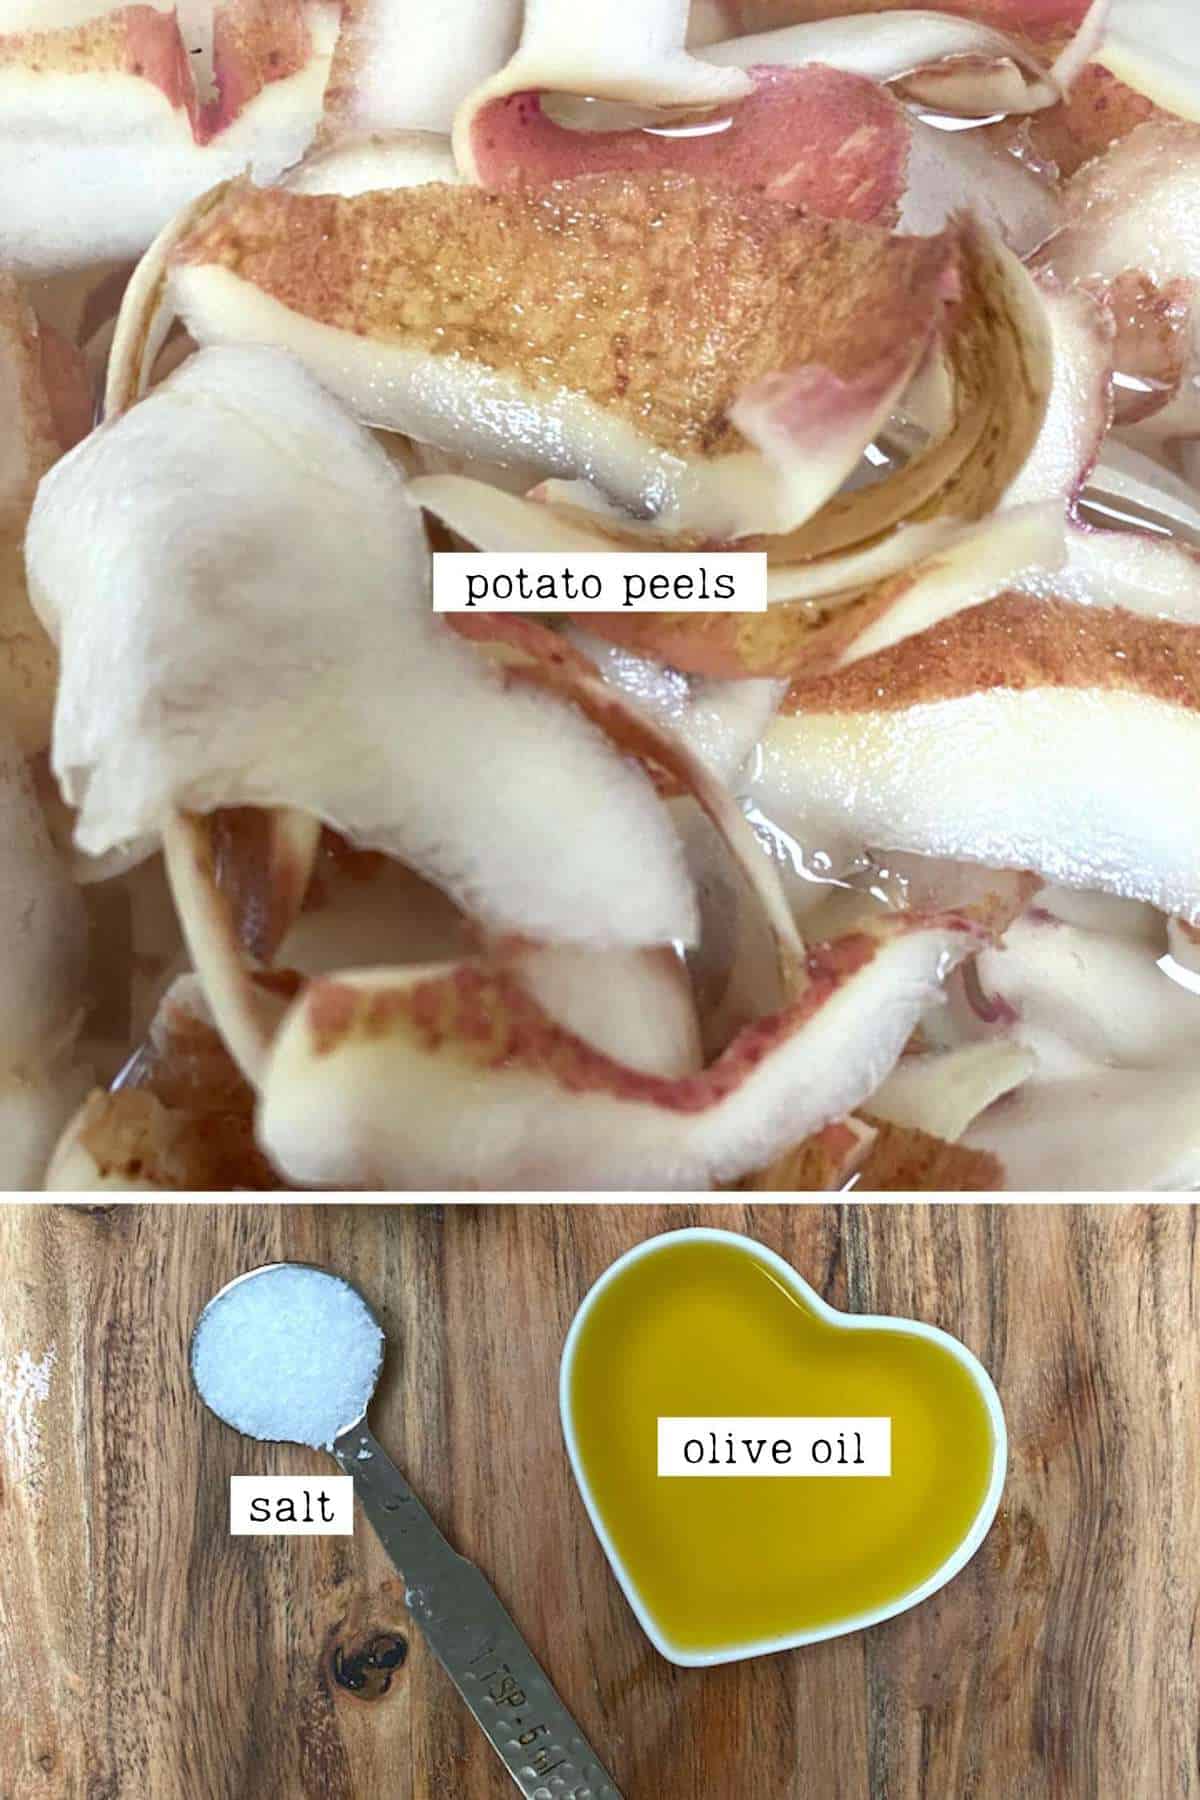 Ingredients for potato peel chips